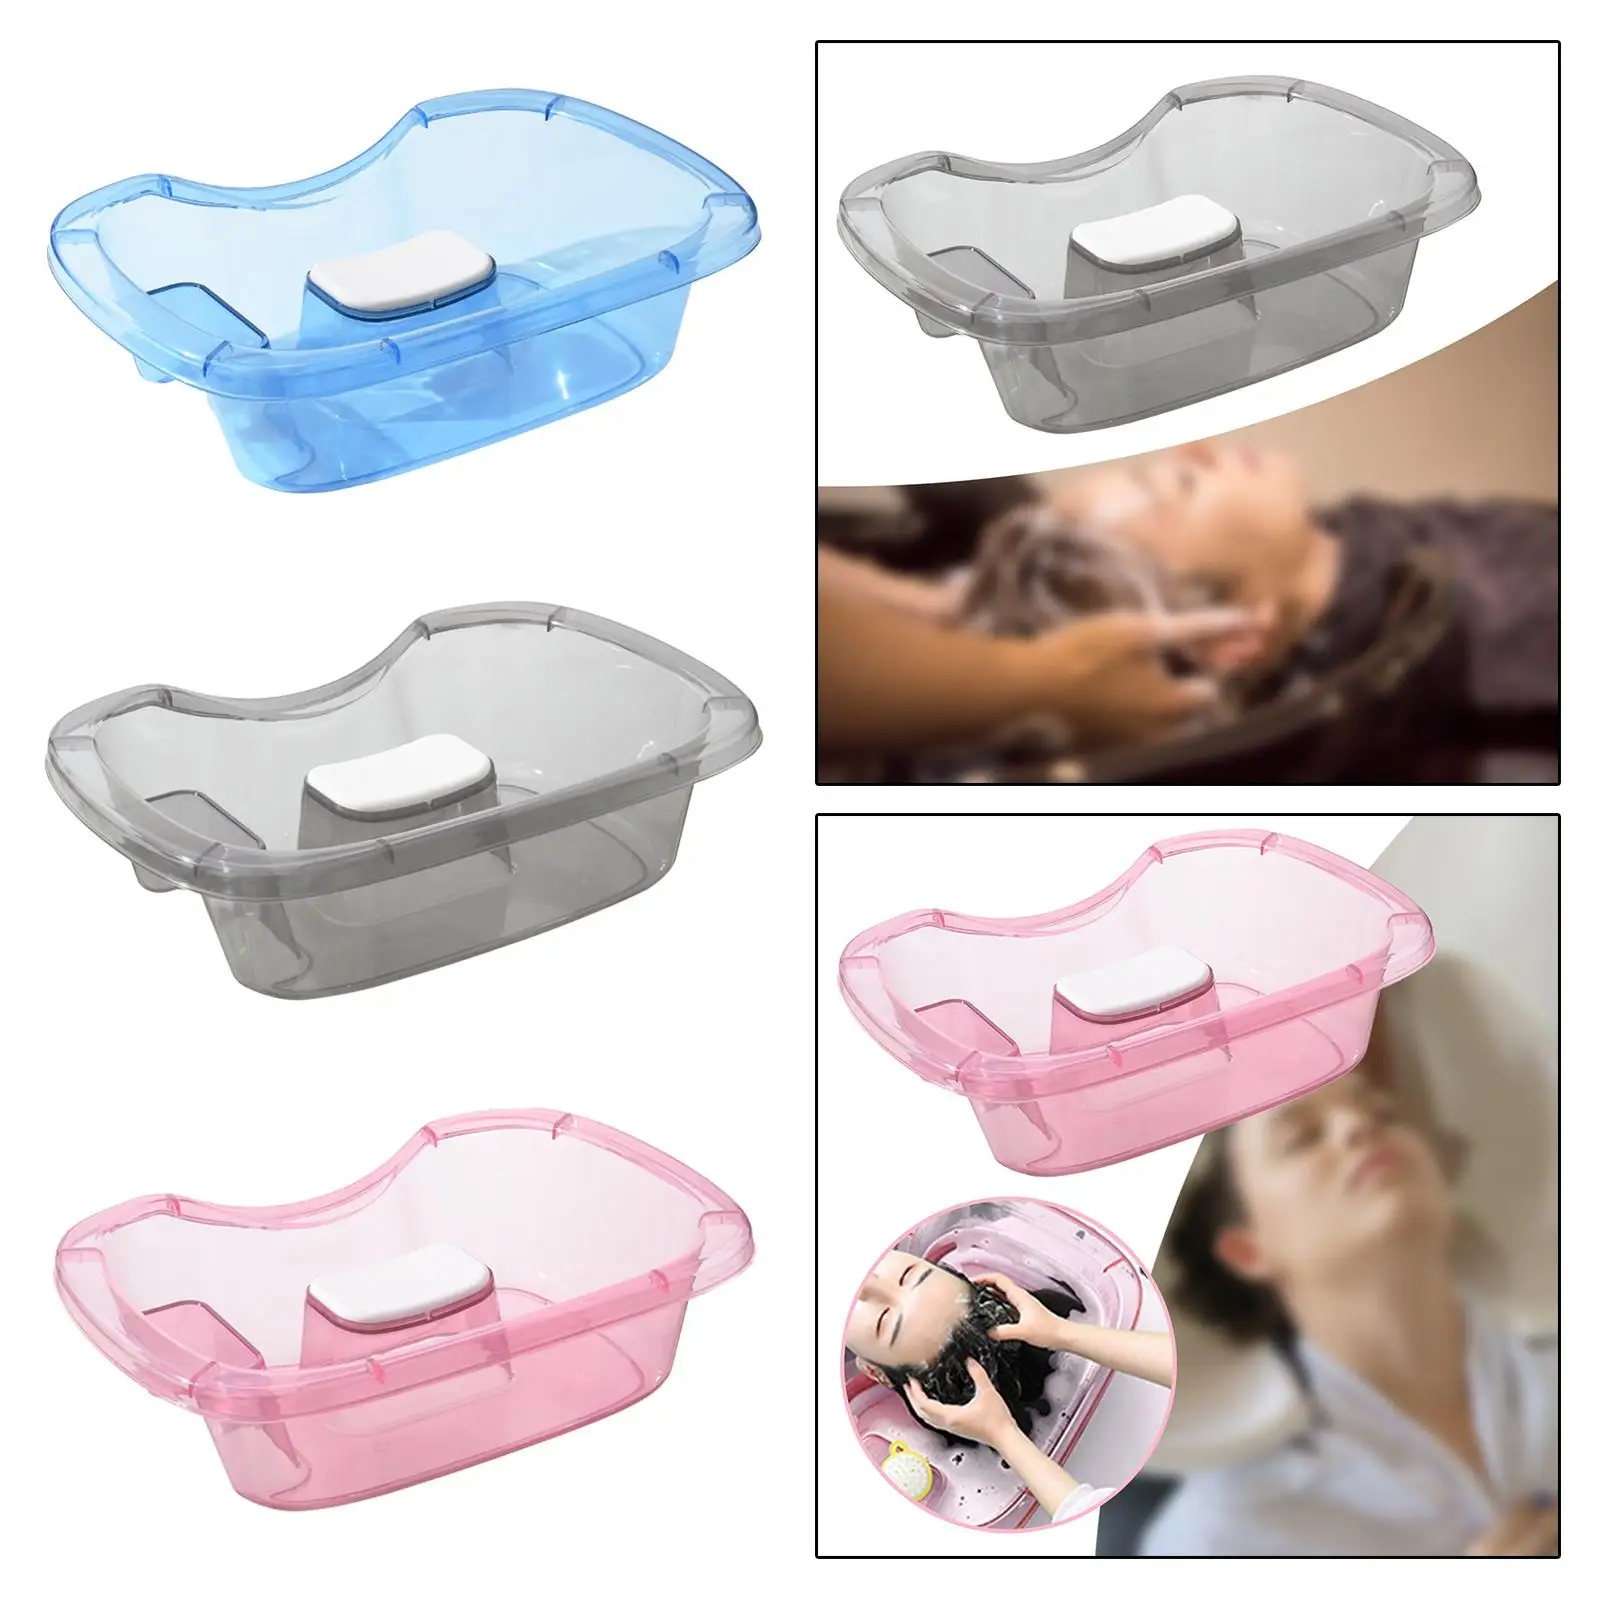 Hair Washing Basin Lightweight Rinse Basin Mobile Shampoo Basin Shampoo Bowl for Bedside Disabled Injured Salon Patients